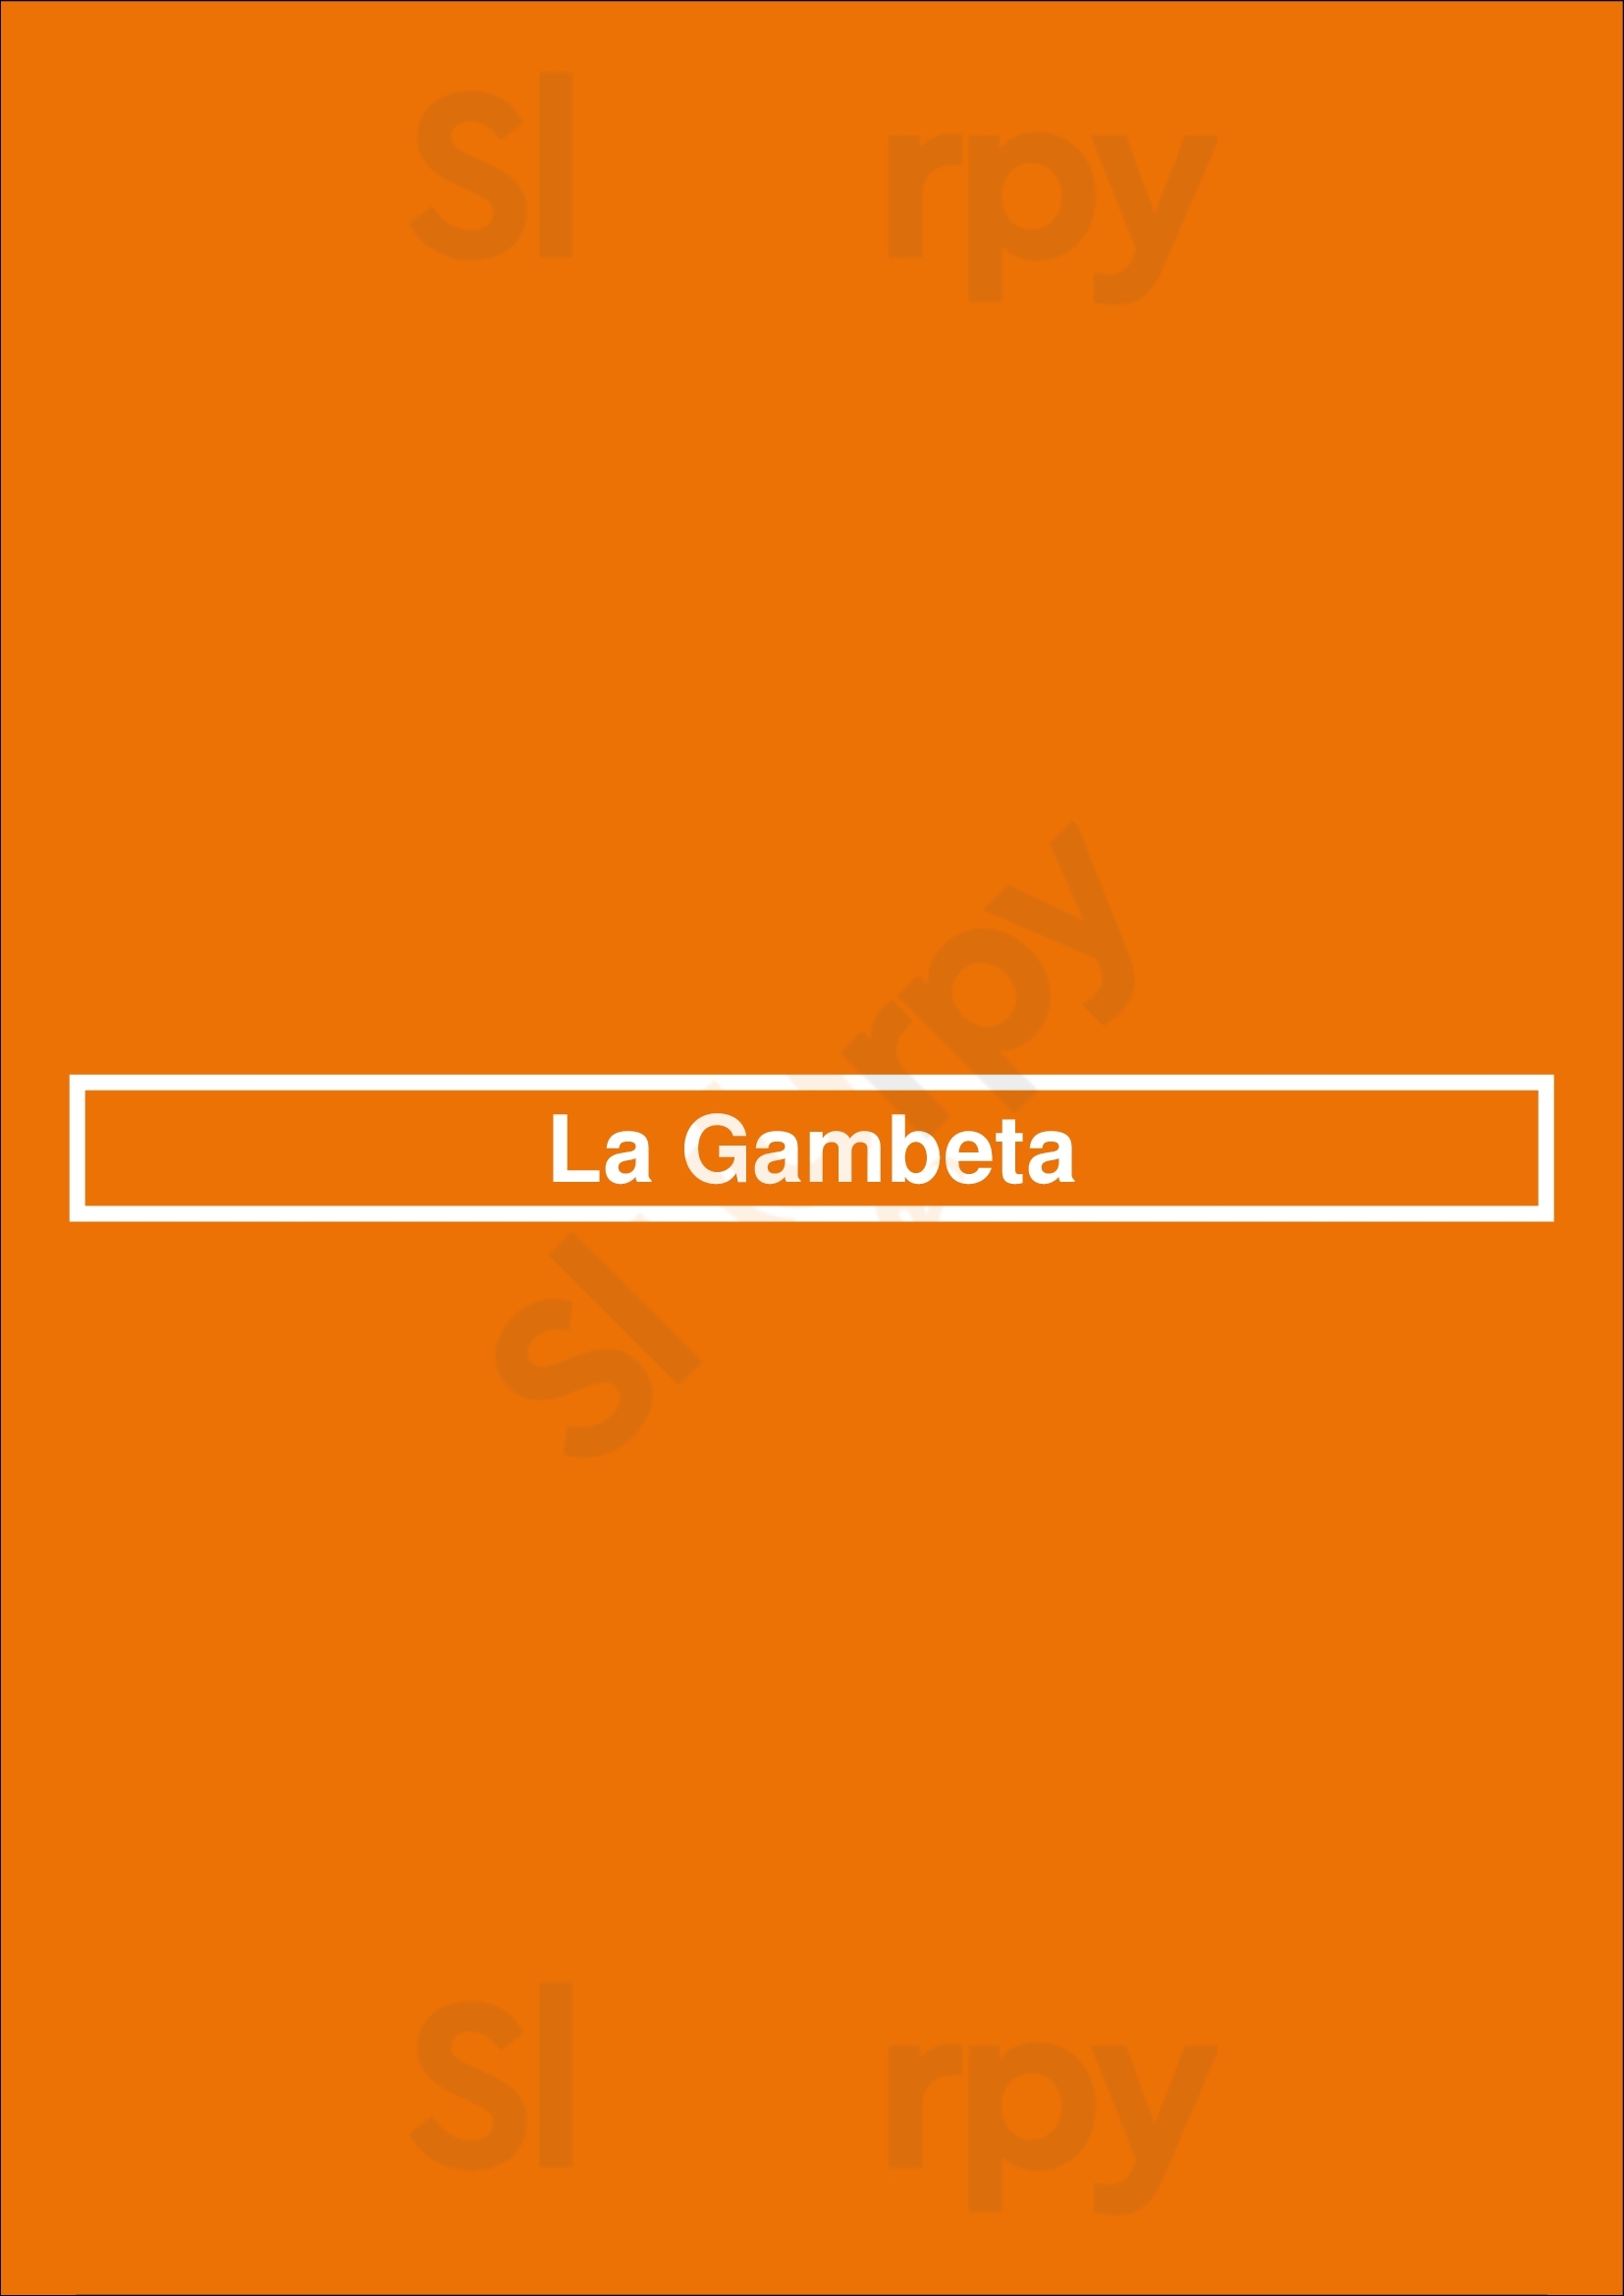 La Gambeta Barcelona Menu - 1